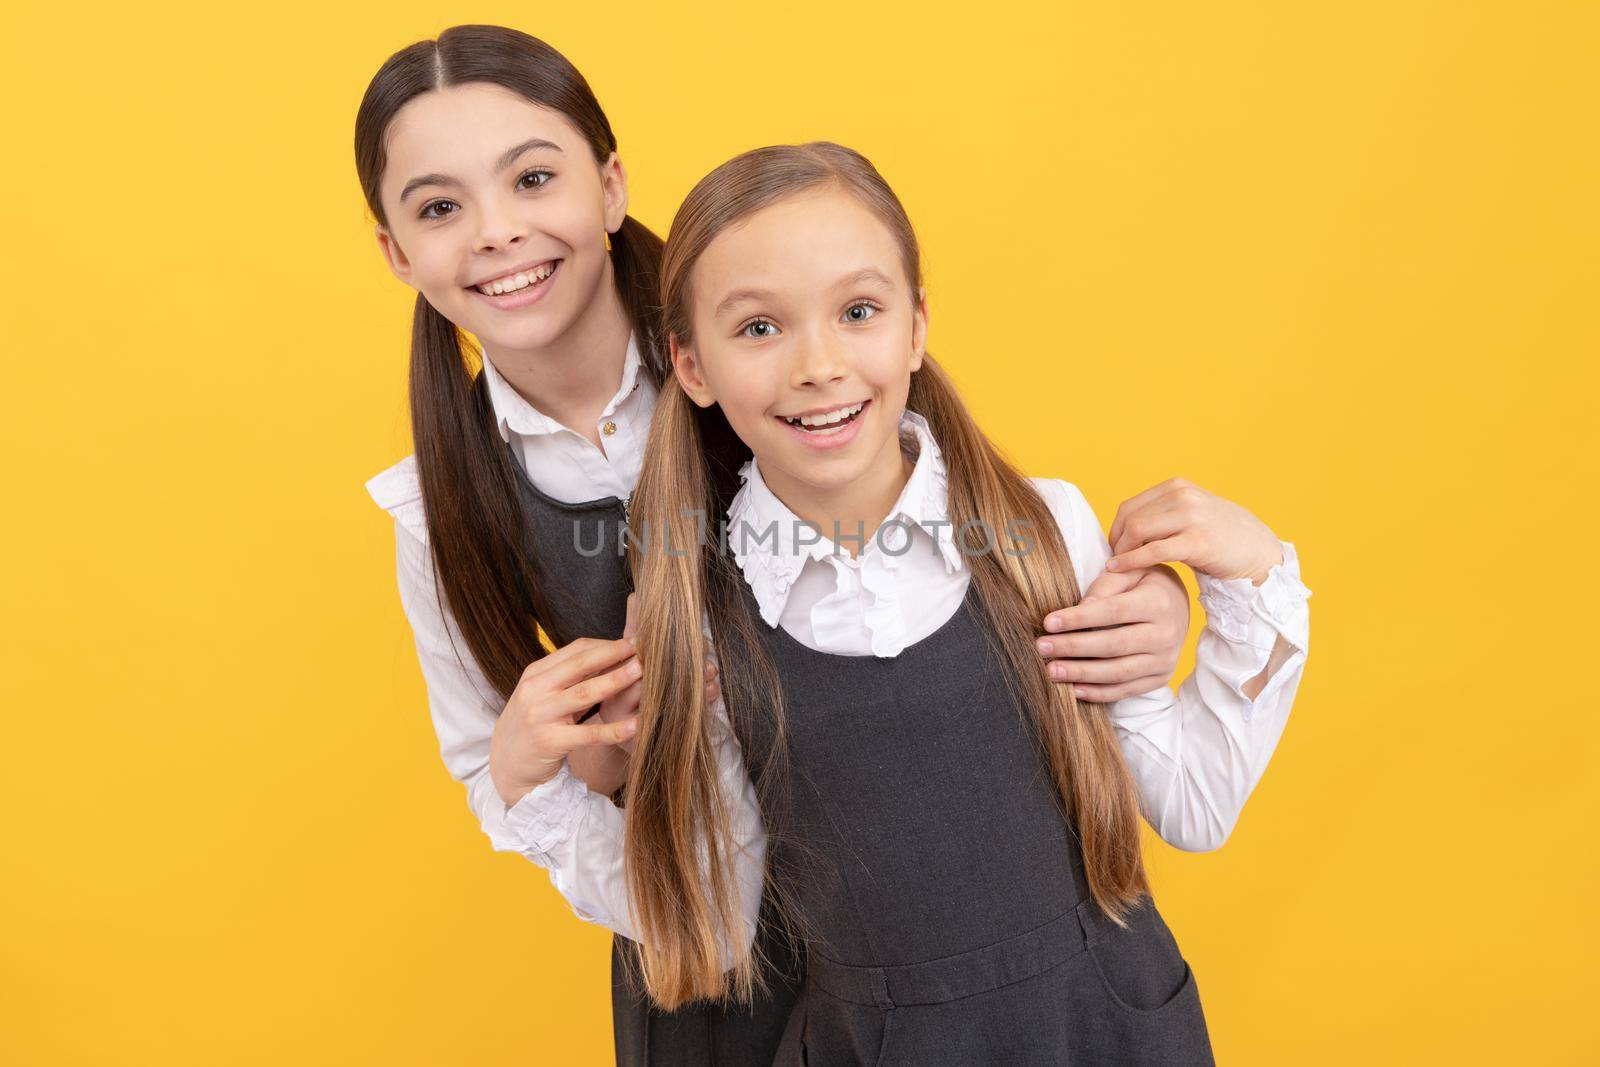 Happy school kids with beauty look wear long hair in formal uniforms yellow background, salon by RedFoxStudio